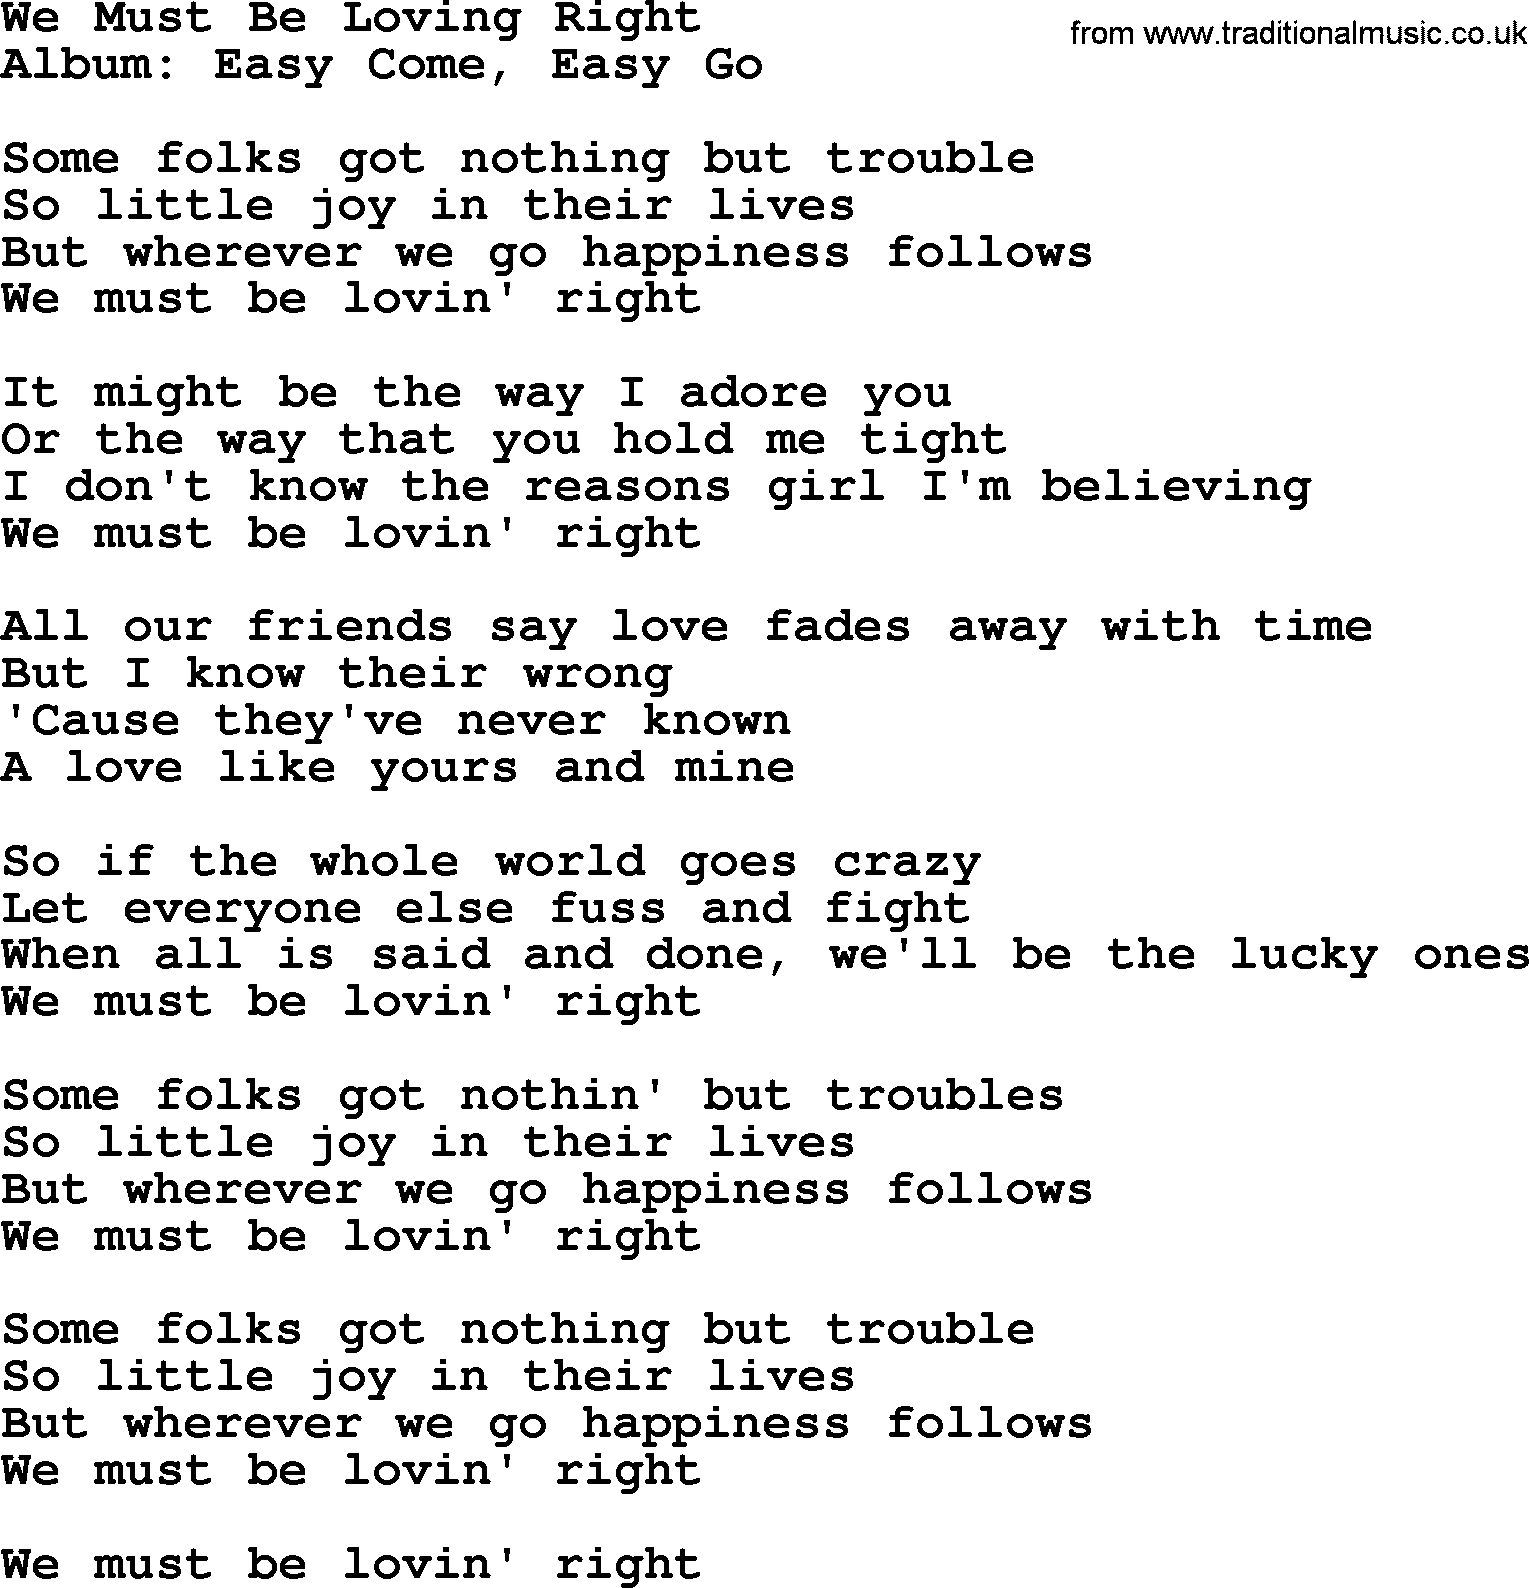 George Strait song: We Must Be Loving Right, lyrics